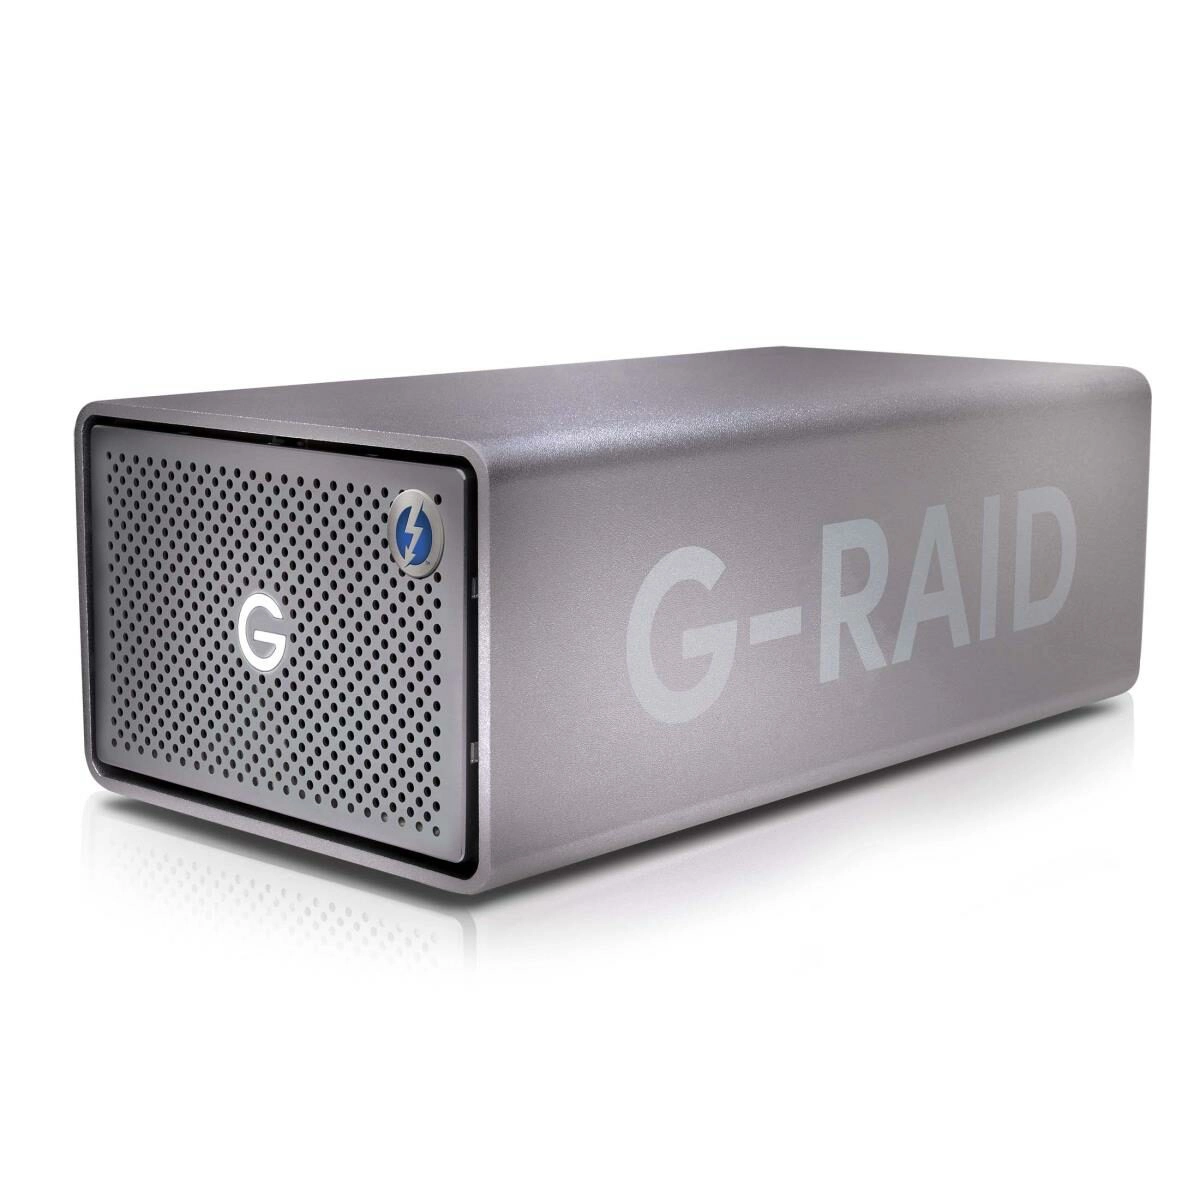 SanDisk Professional G-RAID 2